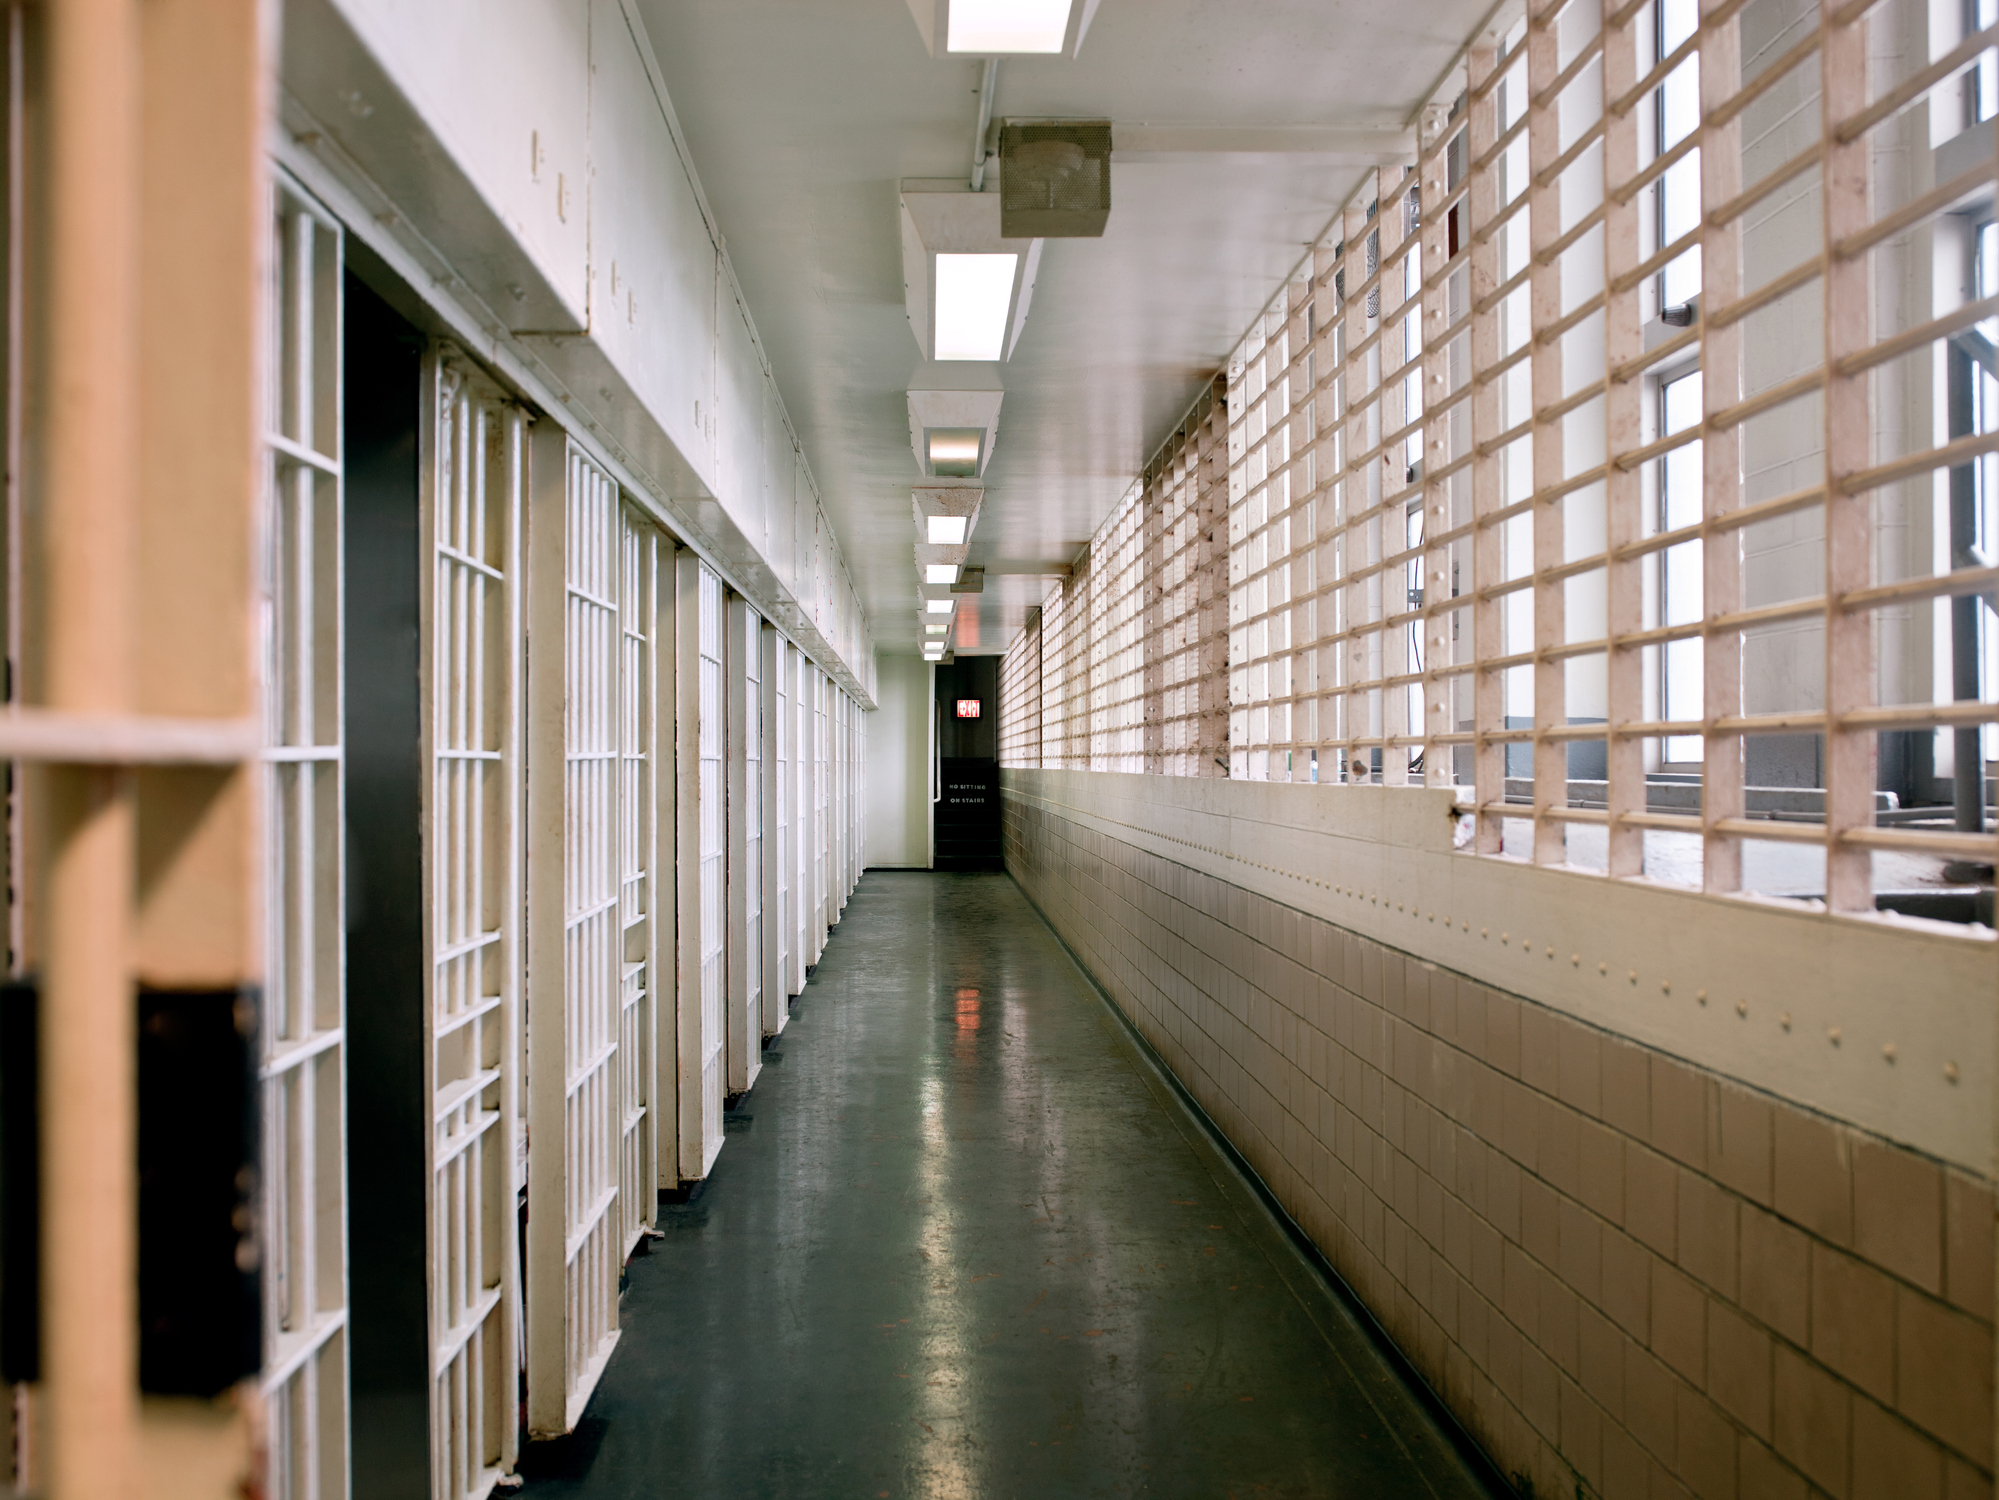 View of empty corridor in prison